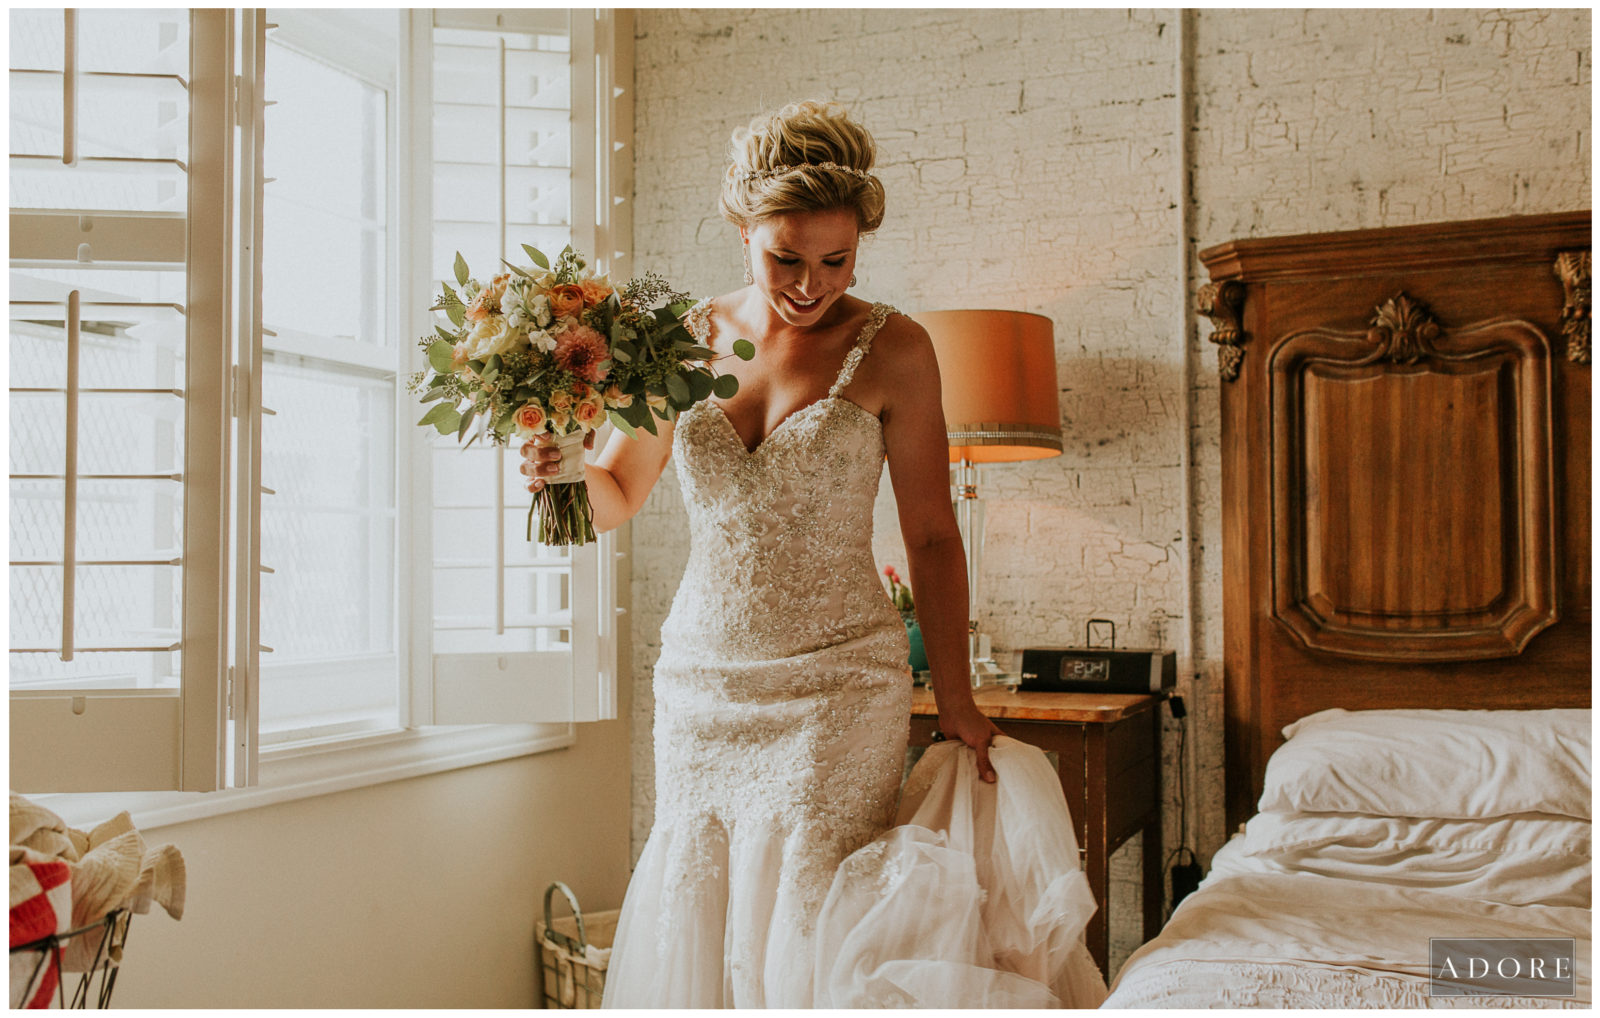 8.2.2018_Natalie & Alex_Adore Wedding Photography_5.jpg